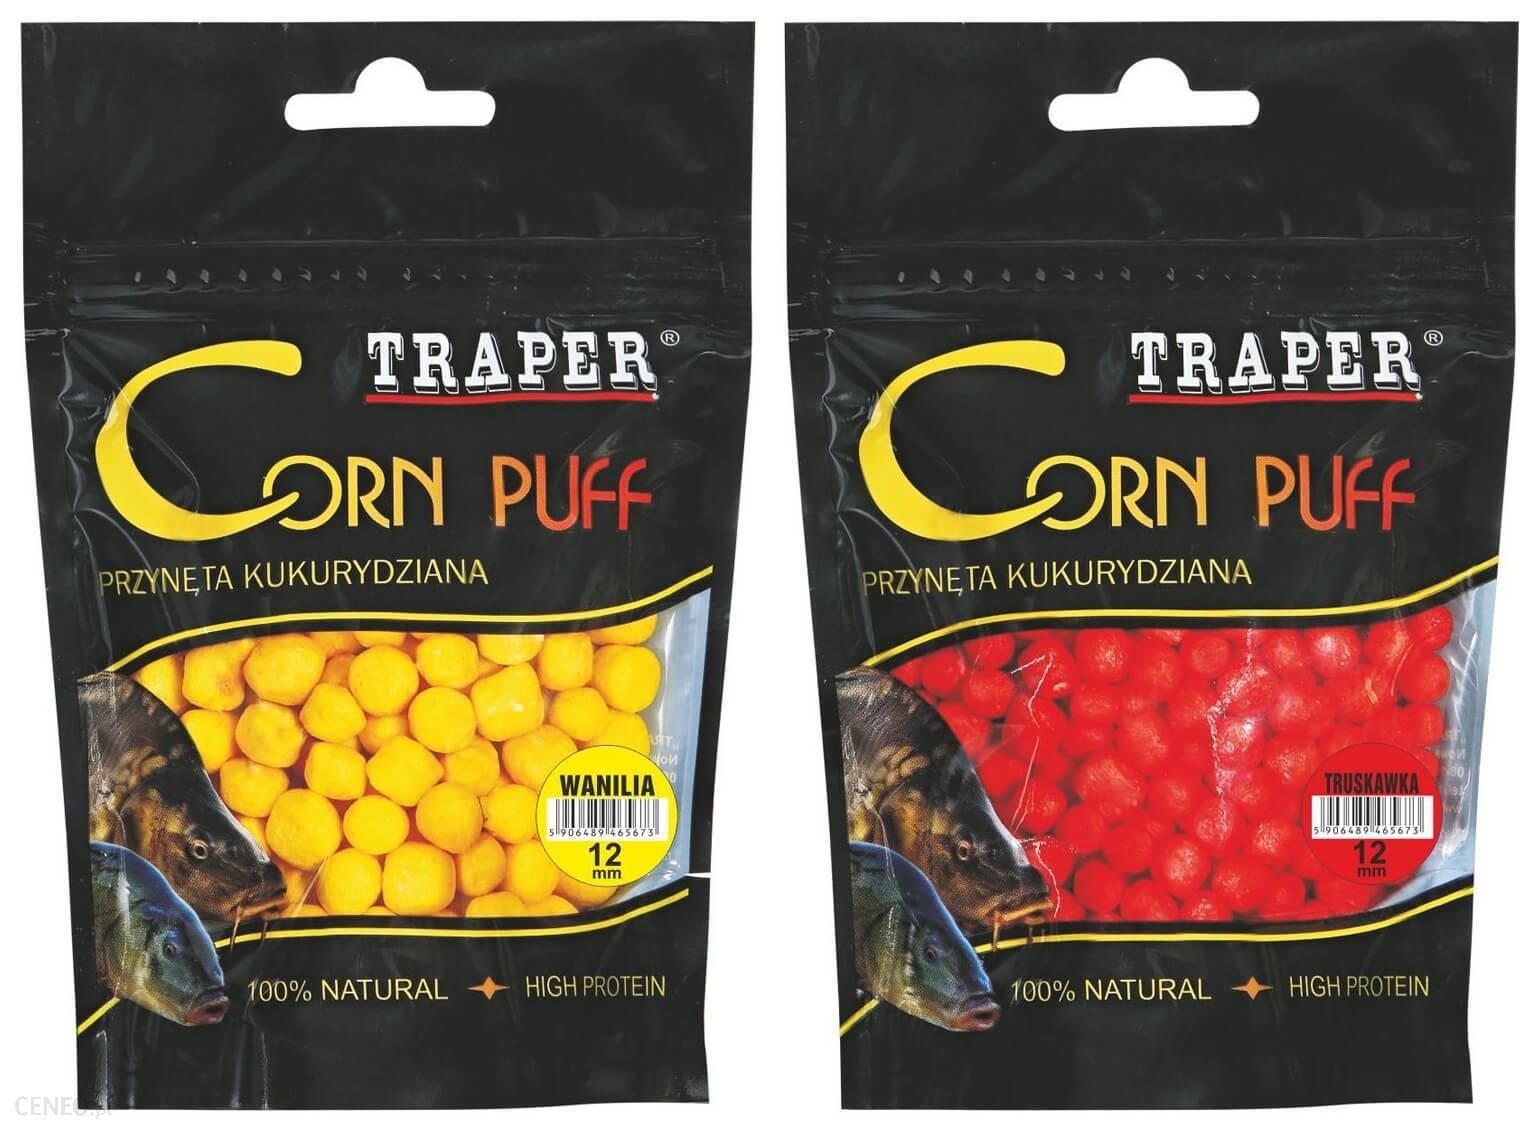 Traper Corn Puff Wanilia 4Mm